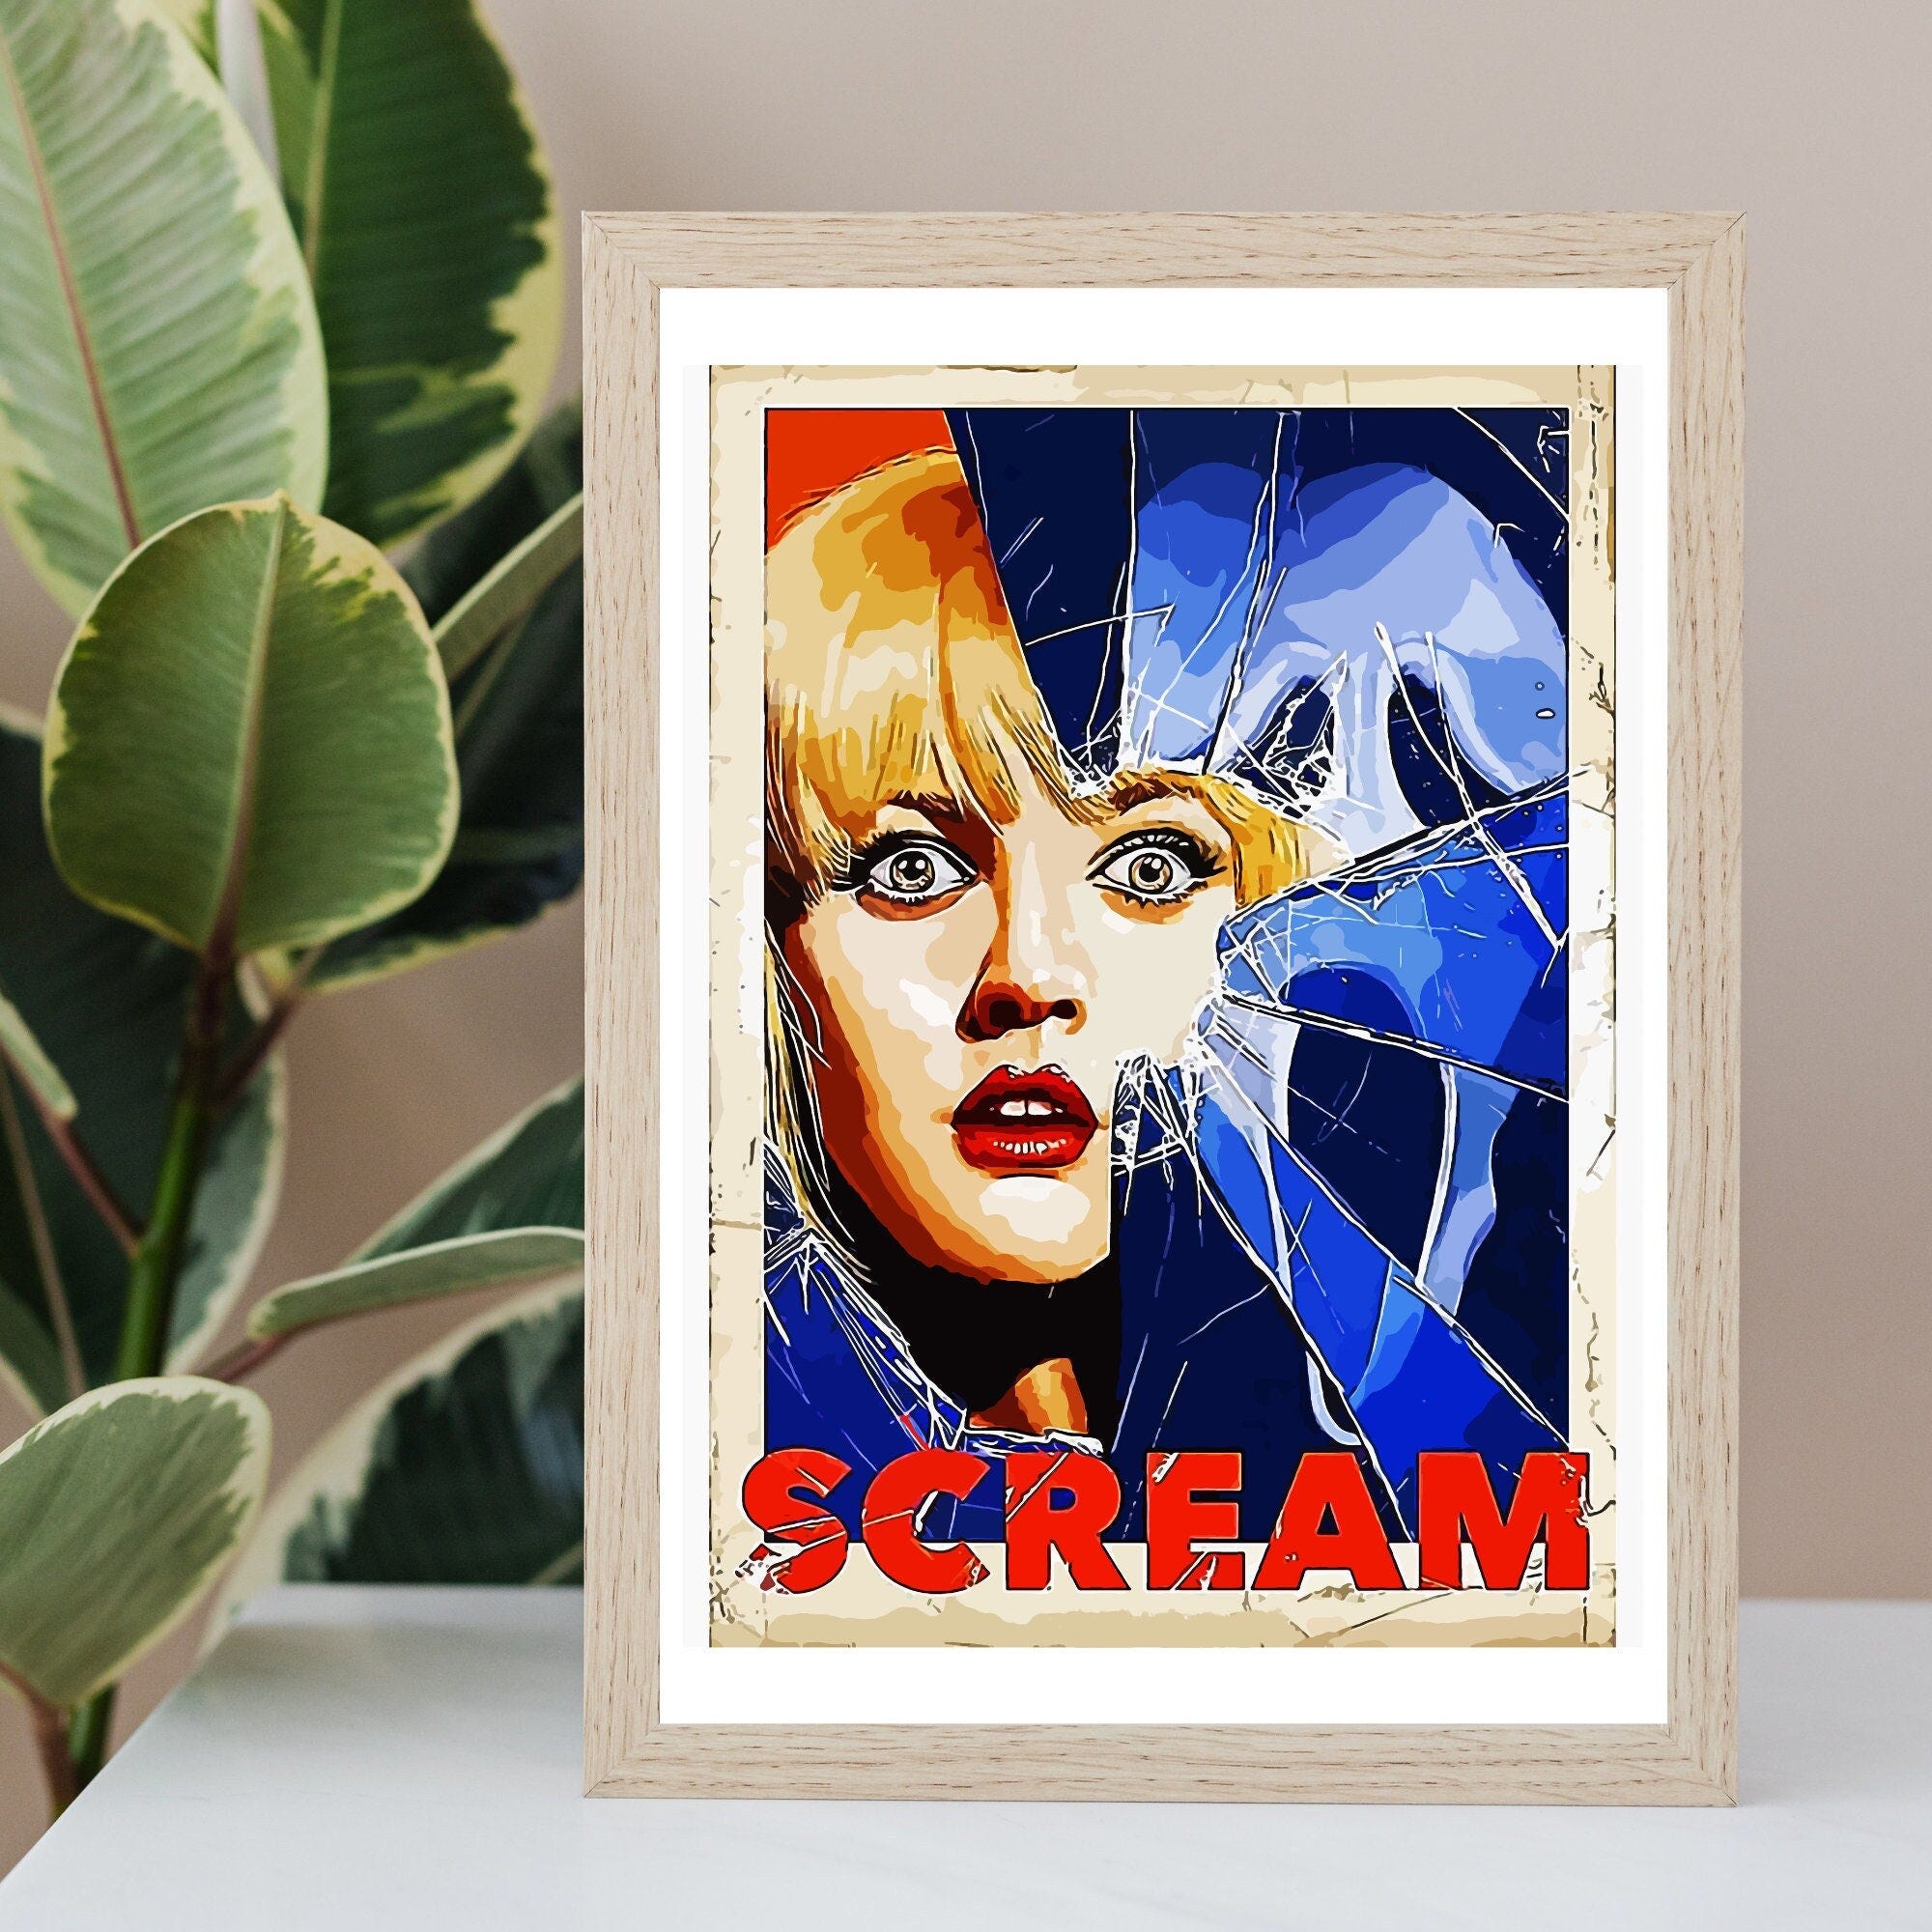 Scream Digital Art Poster Print | Printable Wall Art | Horror Movie Photo. Horror Movie Gifts | Digital Download